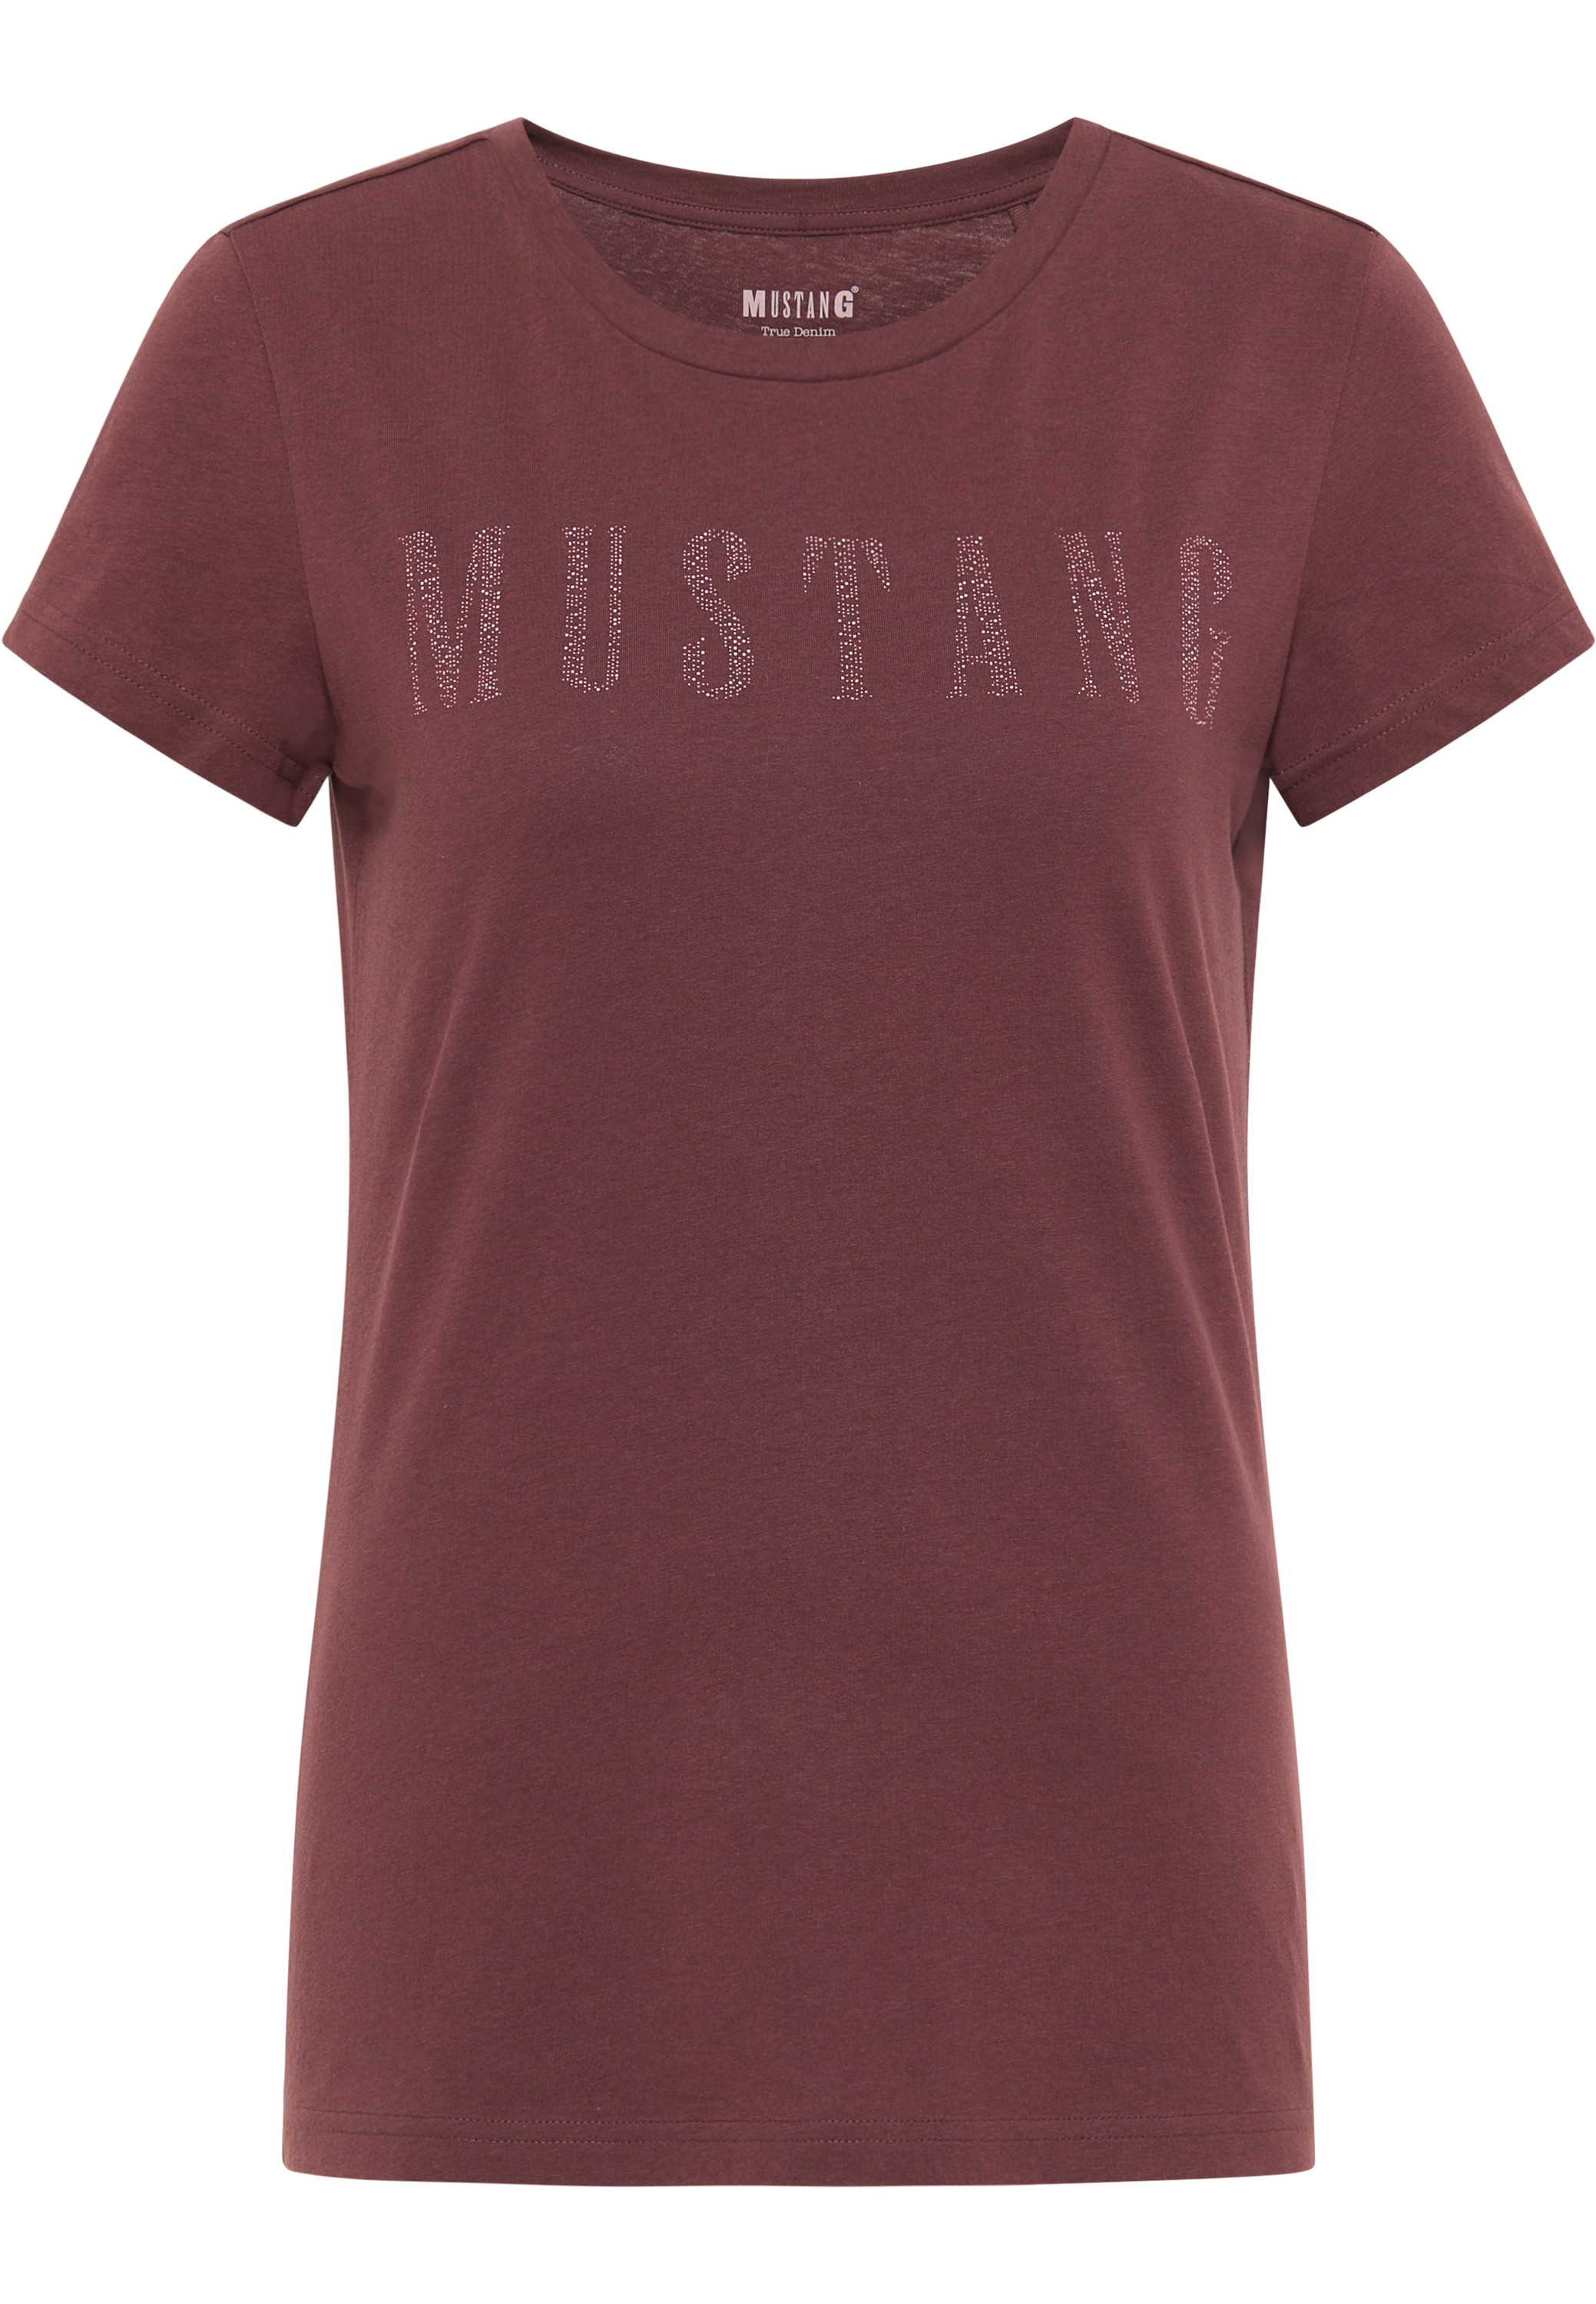 MUSTANG T-Shirt Alexia kaufen »Style C Print«